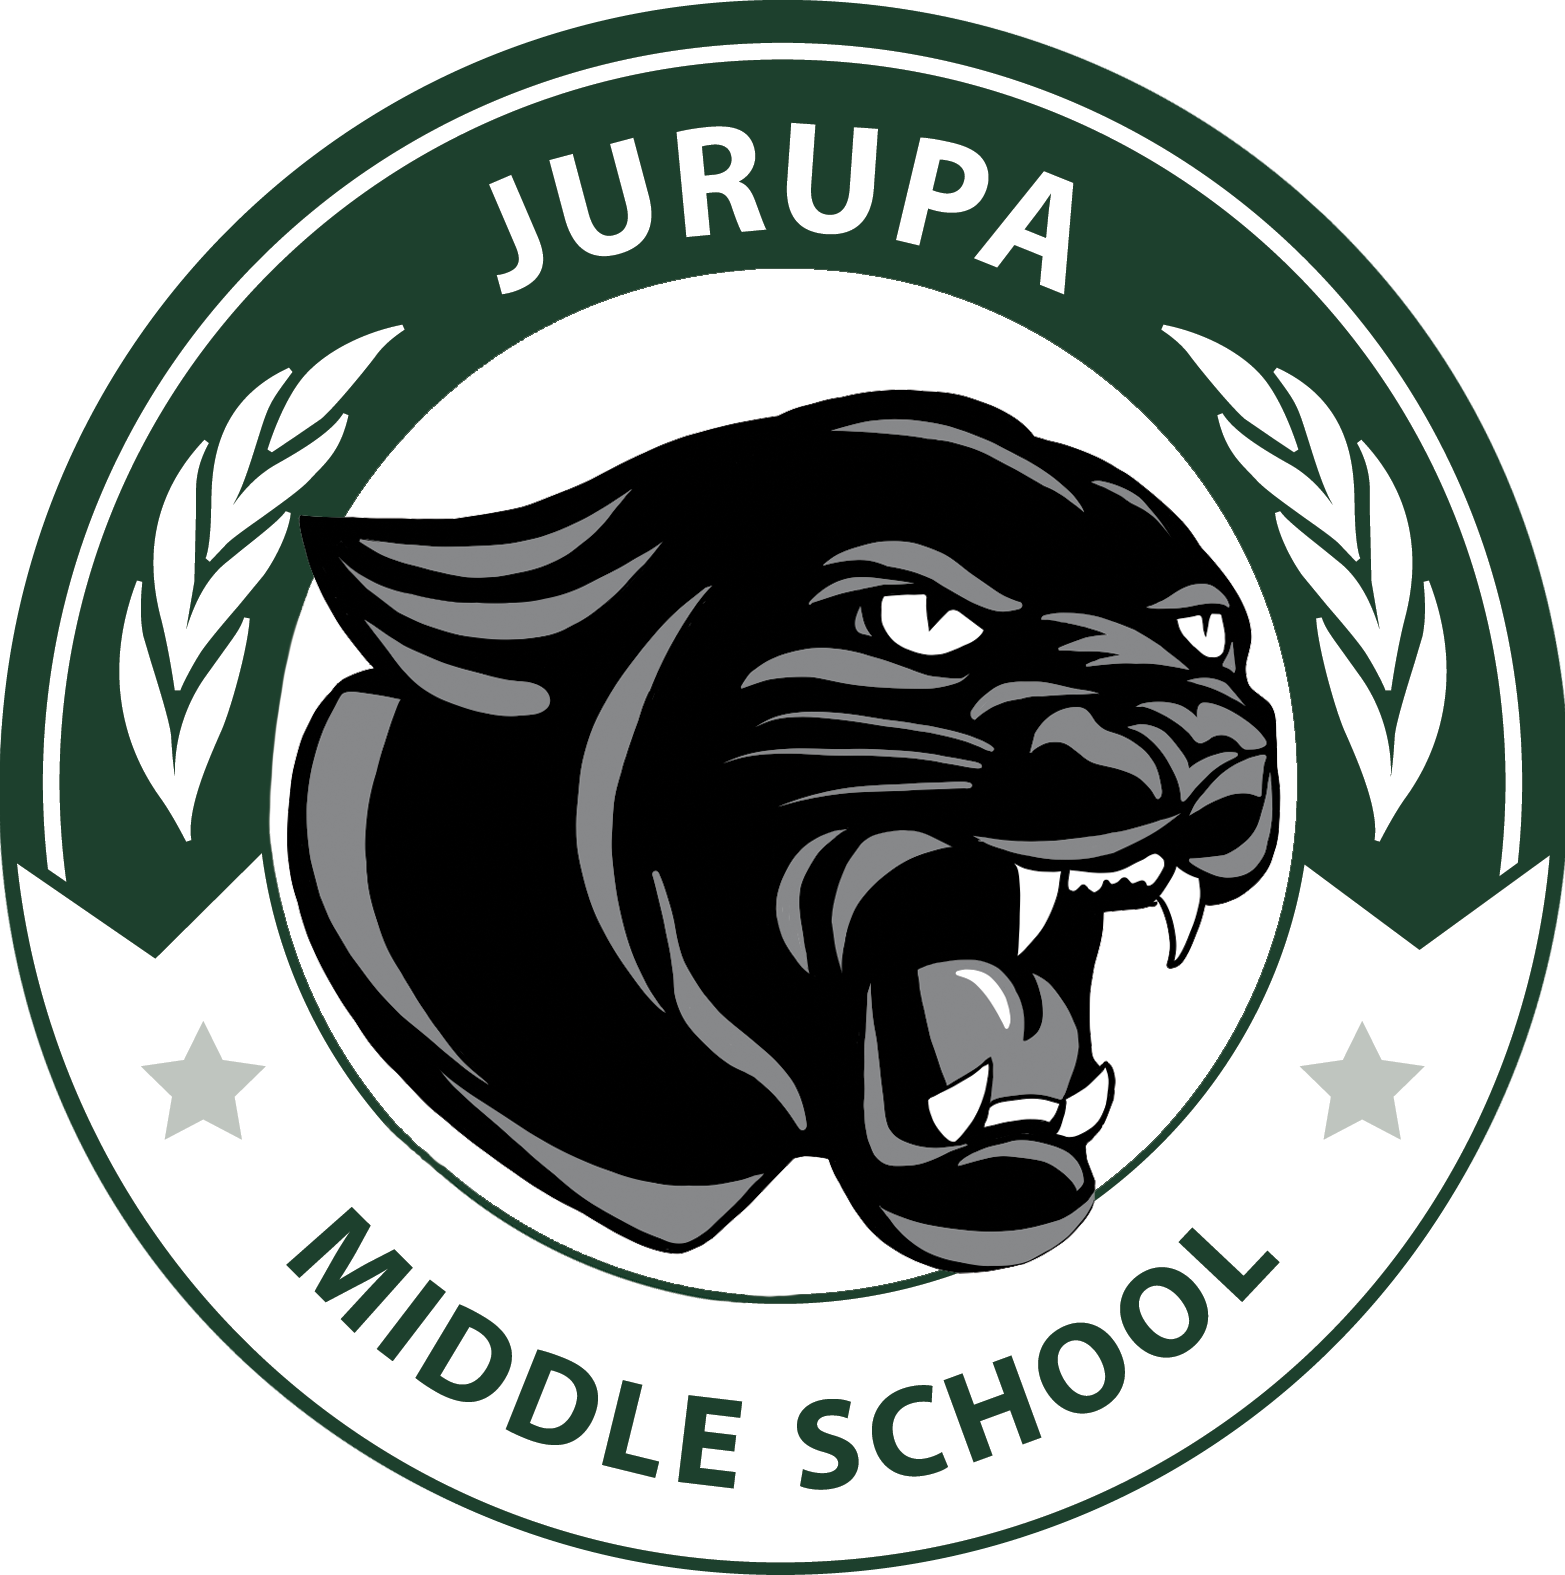 Jurupa Middle New.png